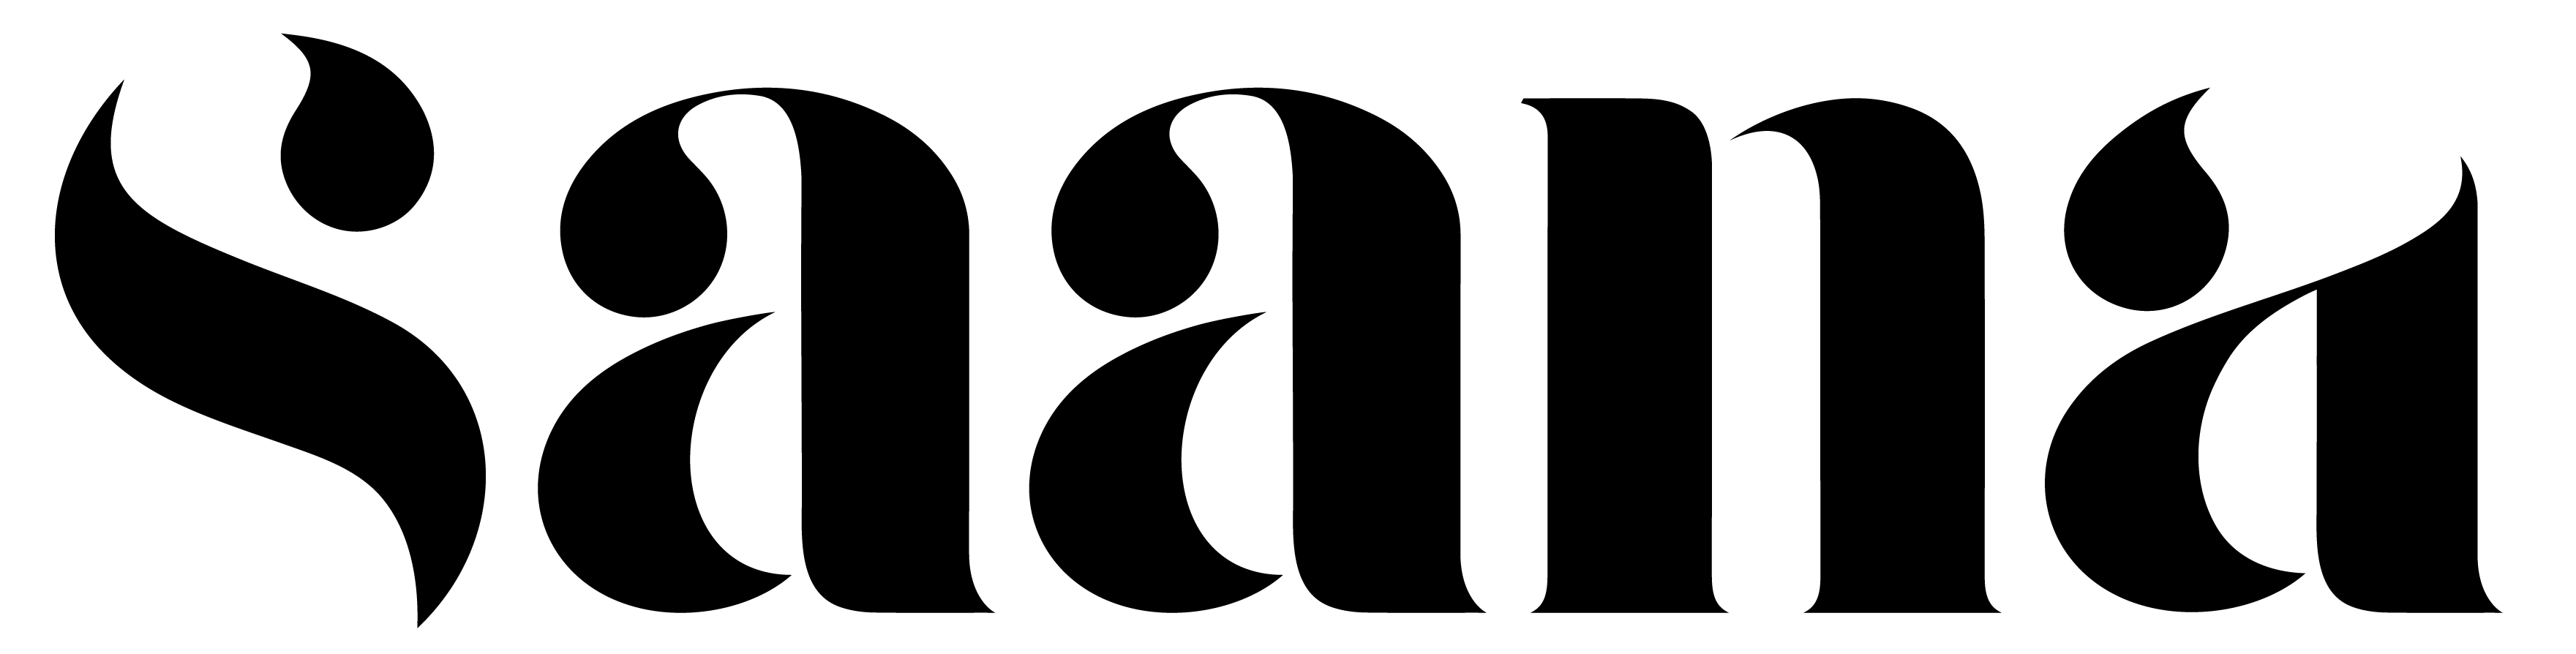 Saana logo